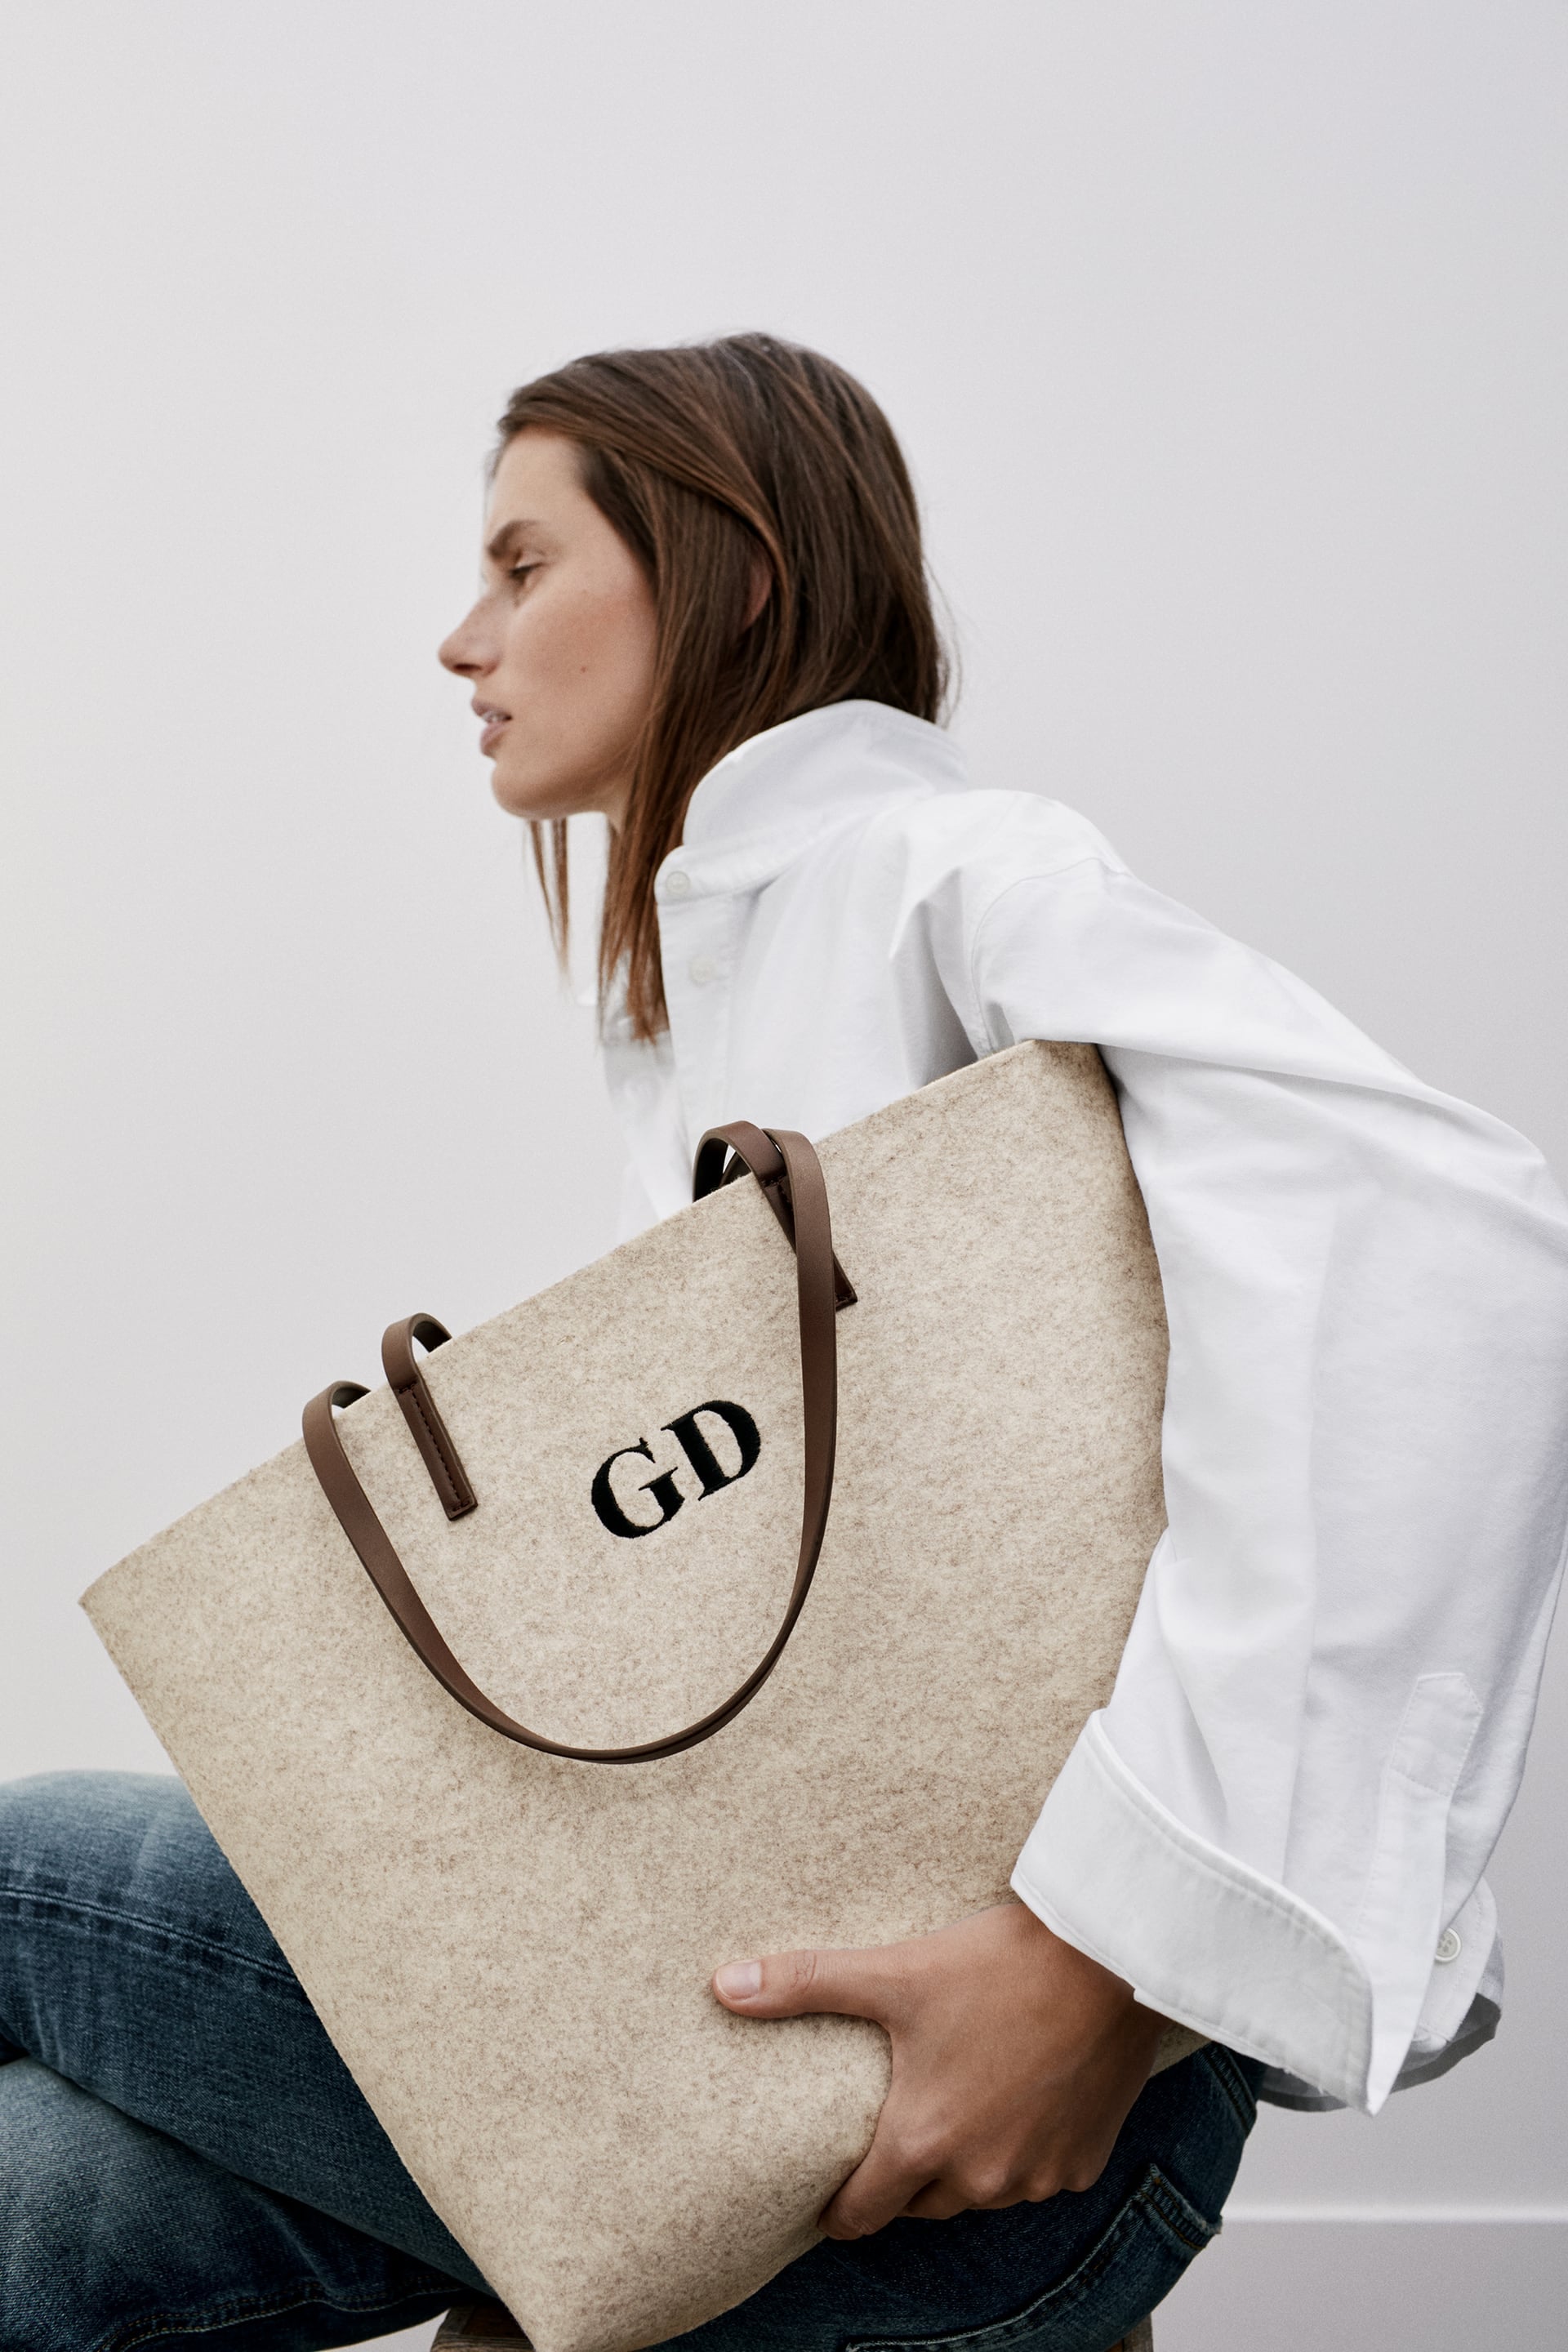 Felt Market Bag in Heather Gray – Earthwise Reusable Bags